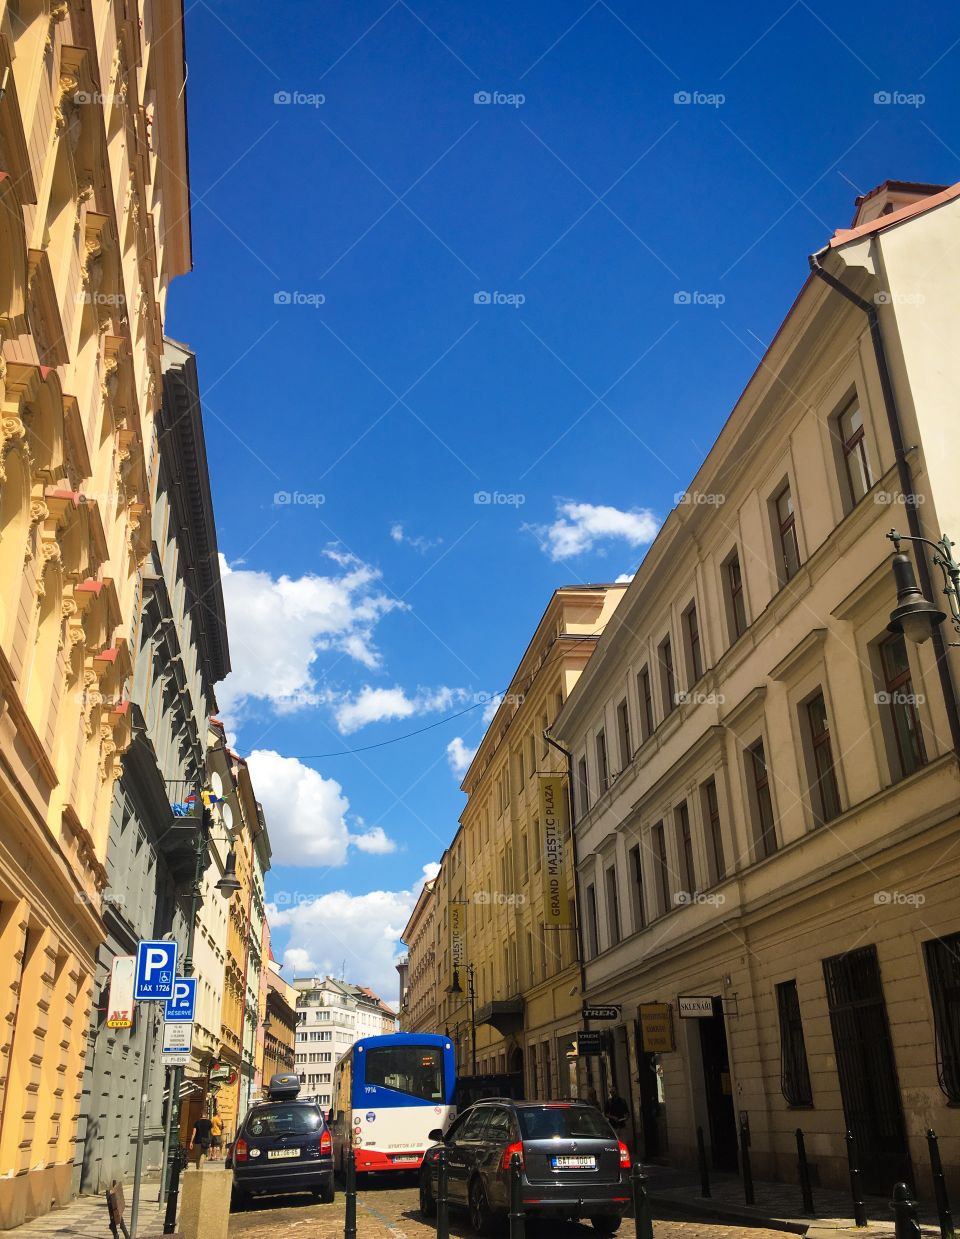 Narrow Beautiful City Street on a Sunny Blue Skies Day